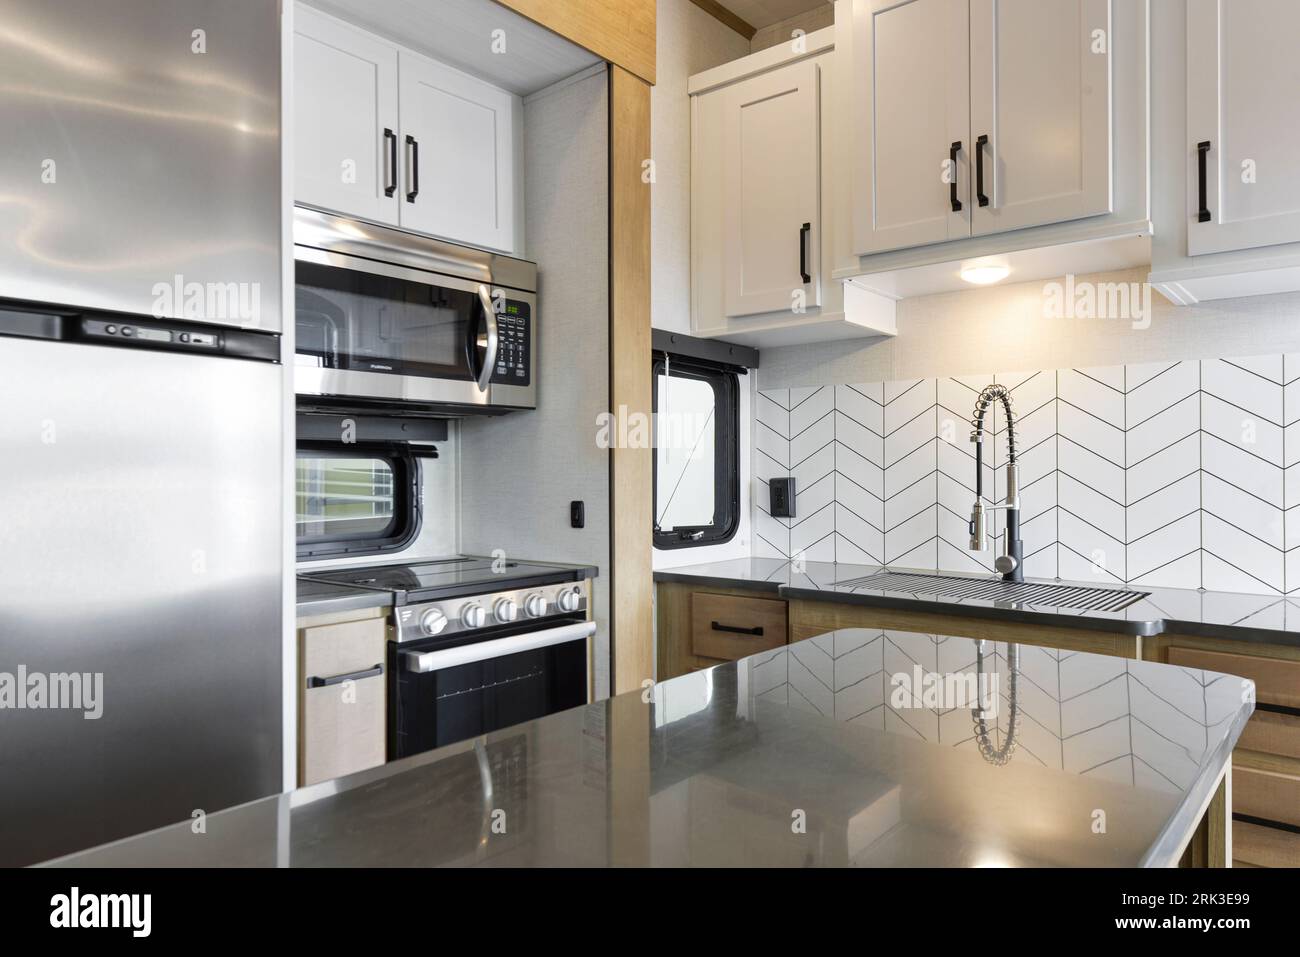 2022 Raptor 352 model RV interior kitchen Stock Photo